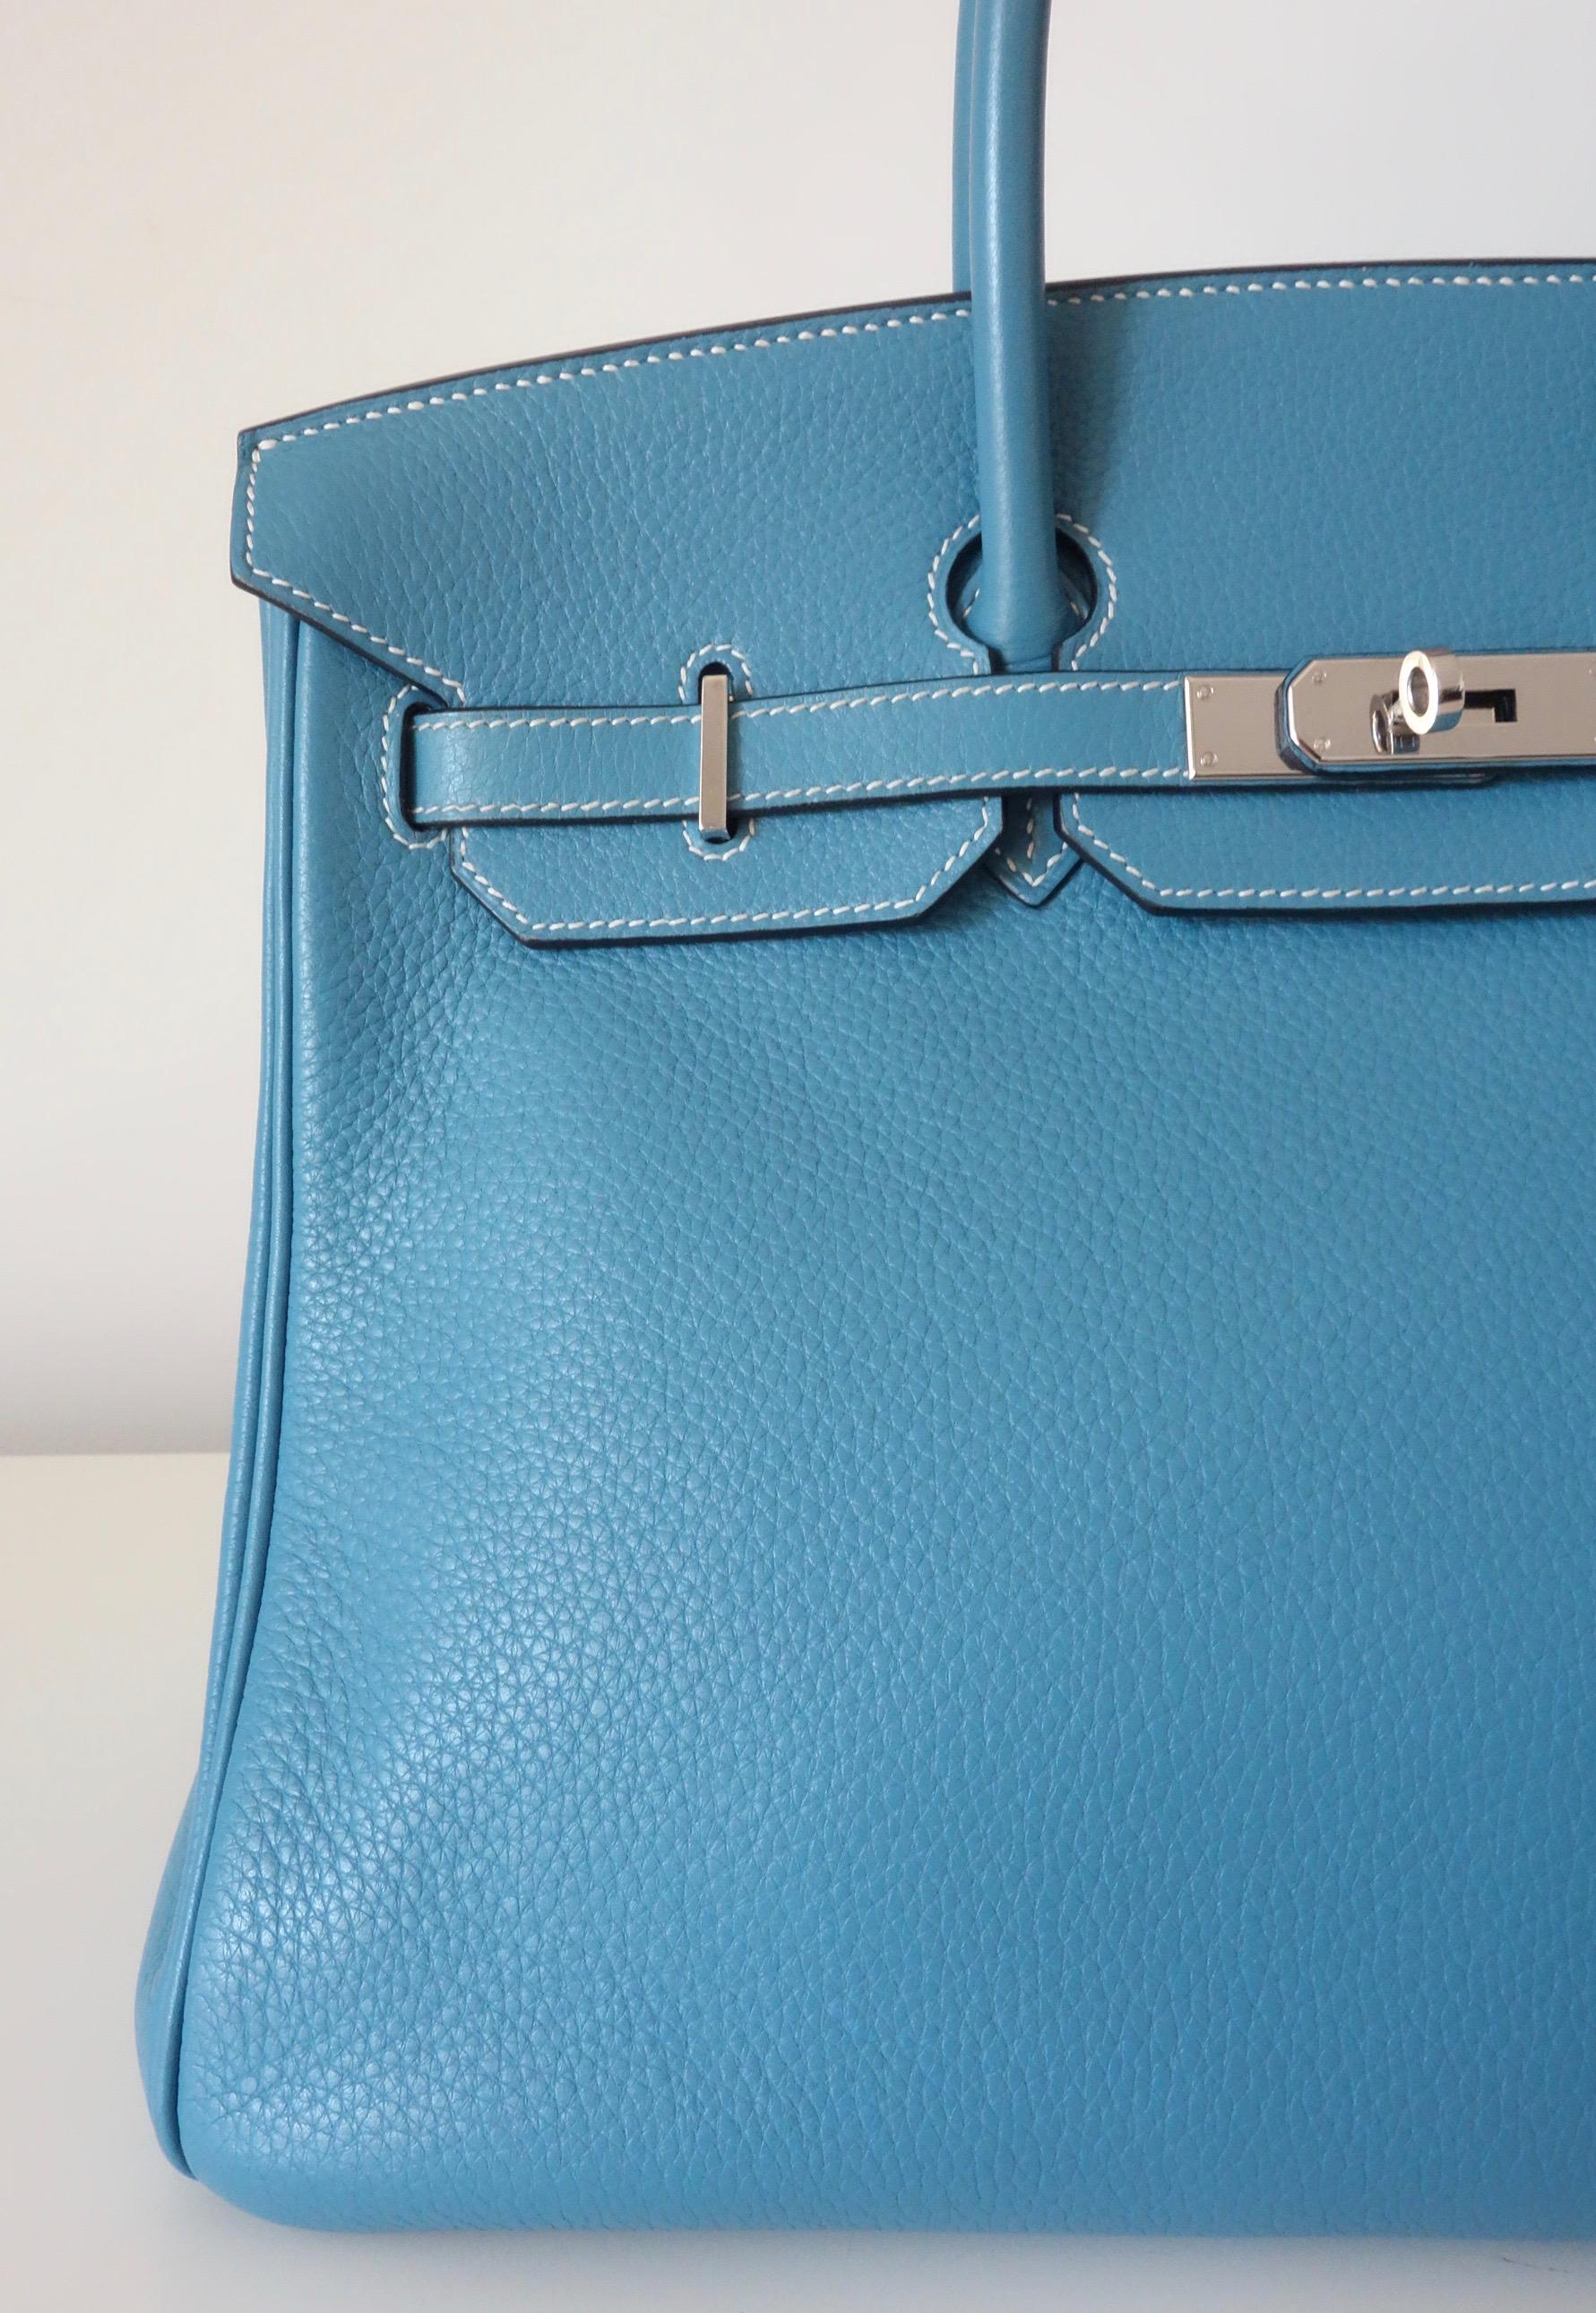 Hermès Taurillon Clemence Bleu Jean PHW 35 cm Birkin Top Handle Bag 7